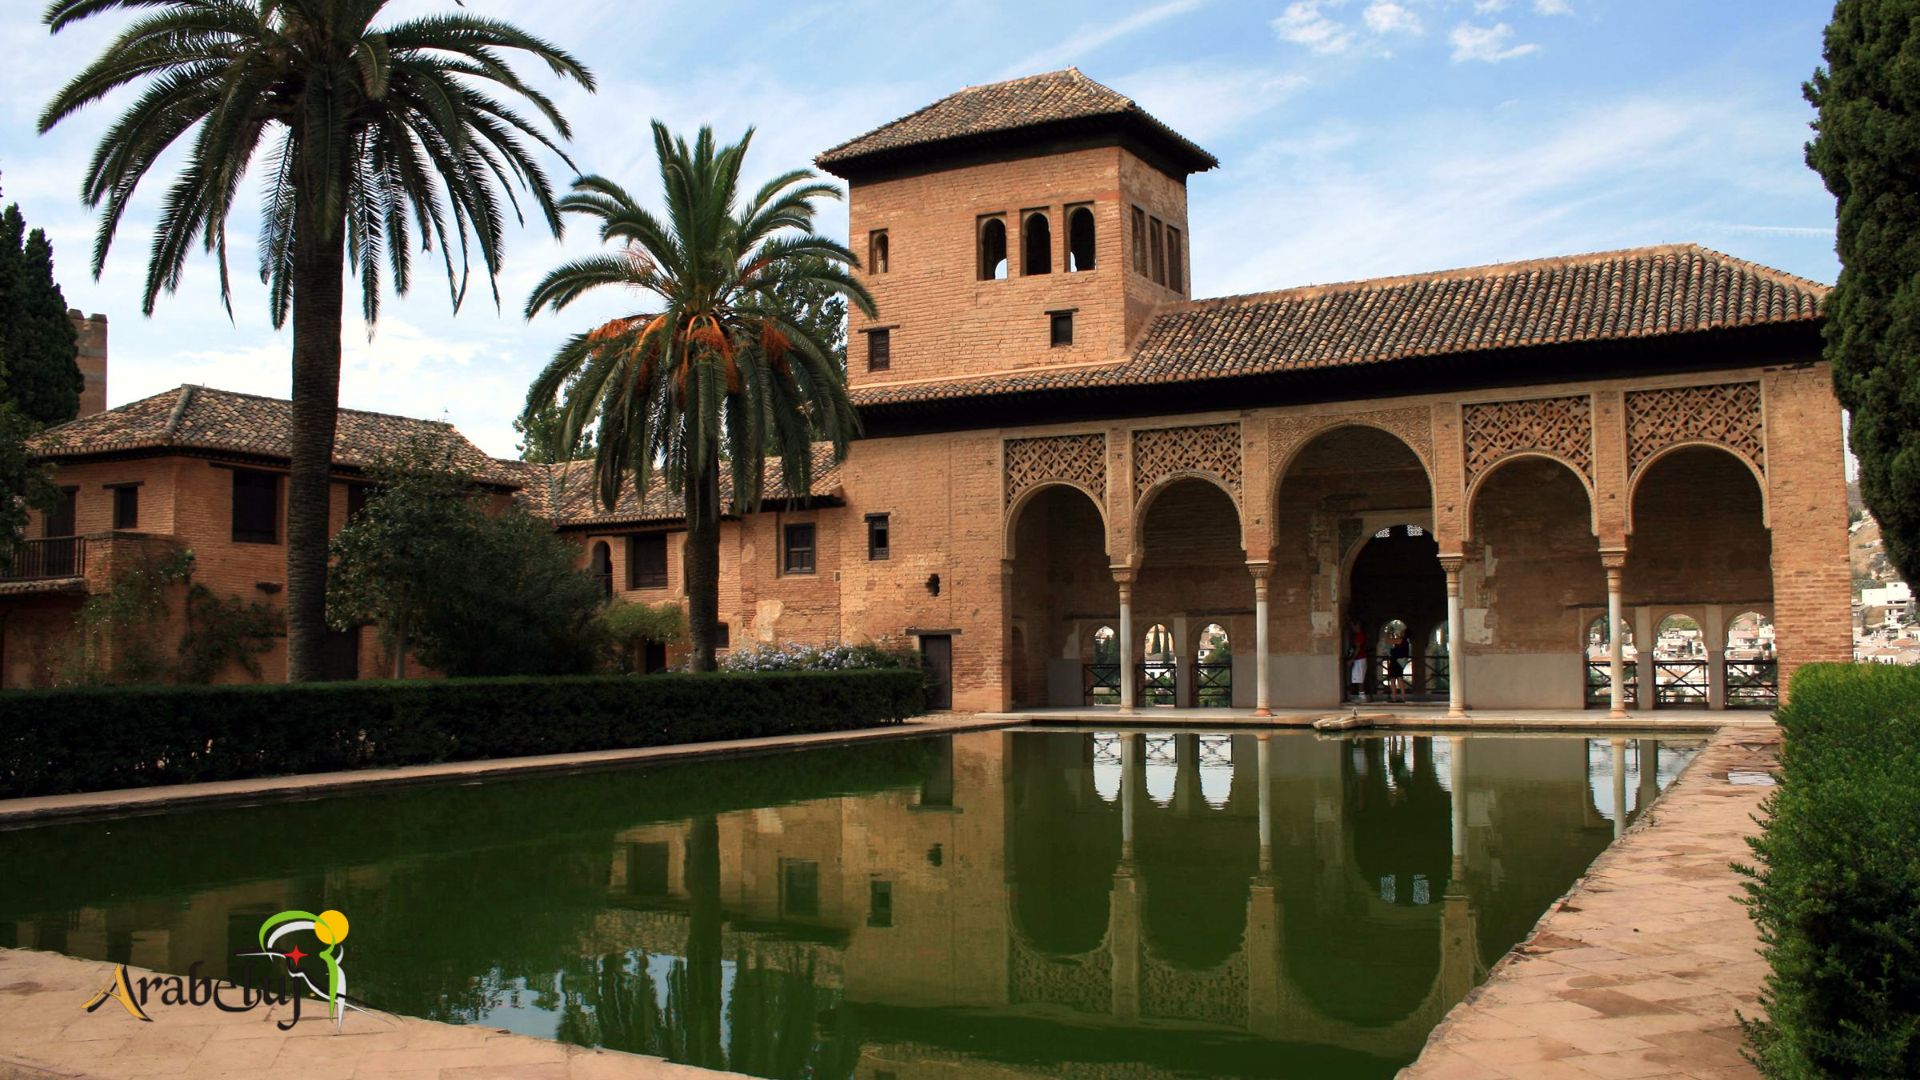 La Alhambra atrae a muchas parejas como destino romántico